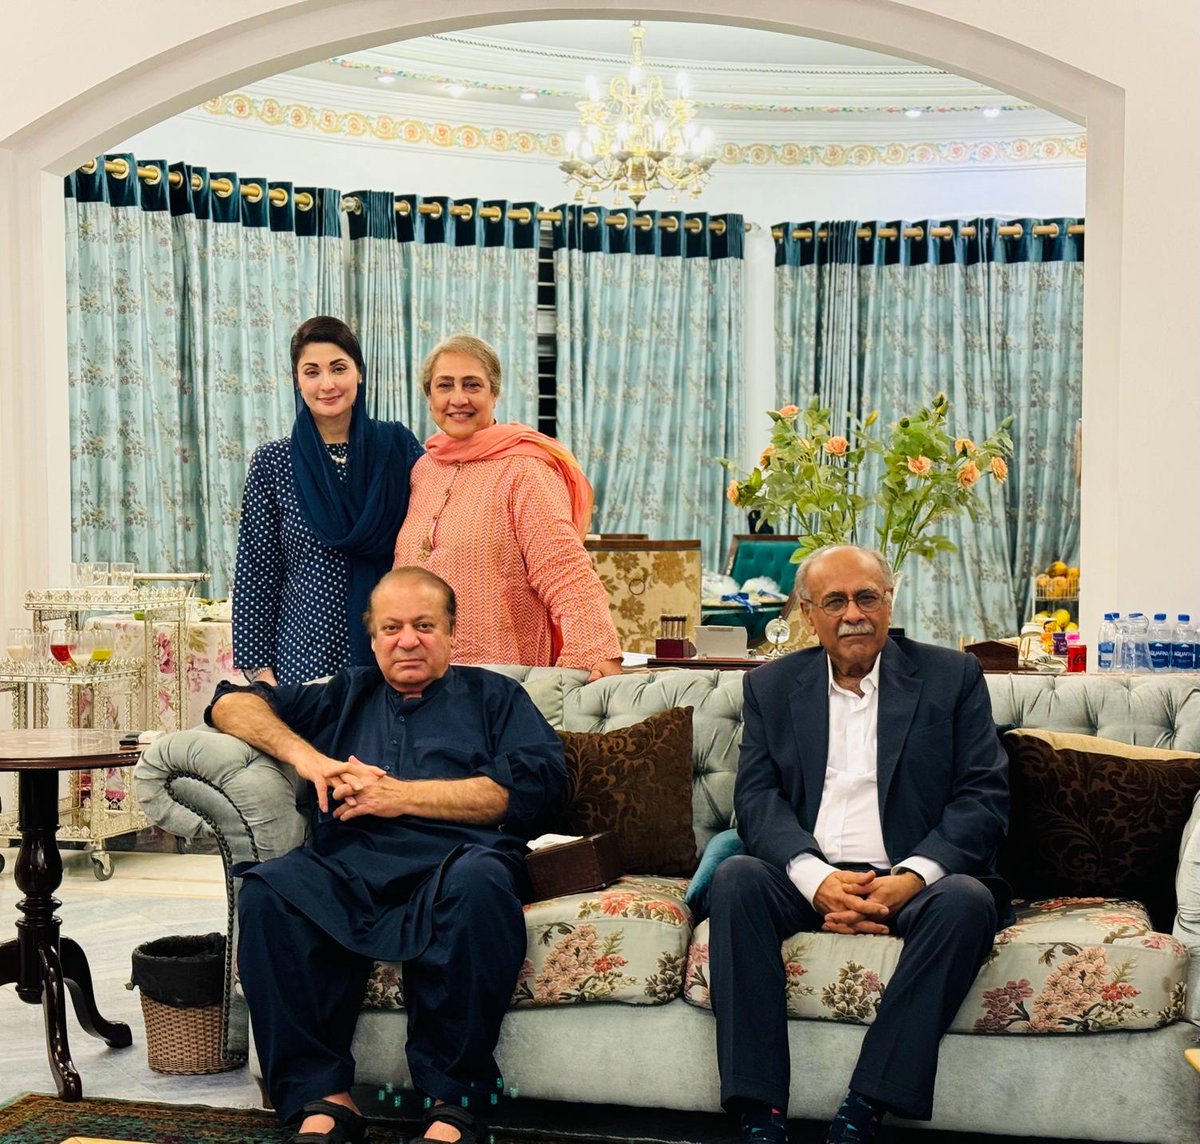 Relaxing! @najamsethi and JM relaxing after Iftar-Dinner in Raiwind with @NawazSharifMNS and CM Punjab @MaryamNSharif. @CMShehbaz @HamidMirPAK @ayazakbar786 @AzazSyed @abdul_aleemkhan @SYahyaHussaini @bhattimajid @Abbasshabbir72 @generalqayyum @saleemkhaliq